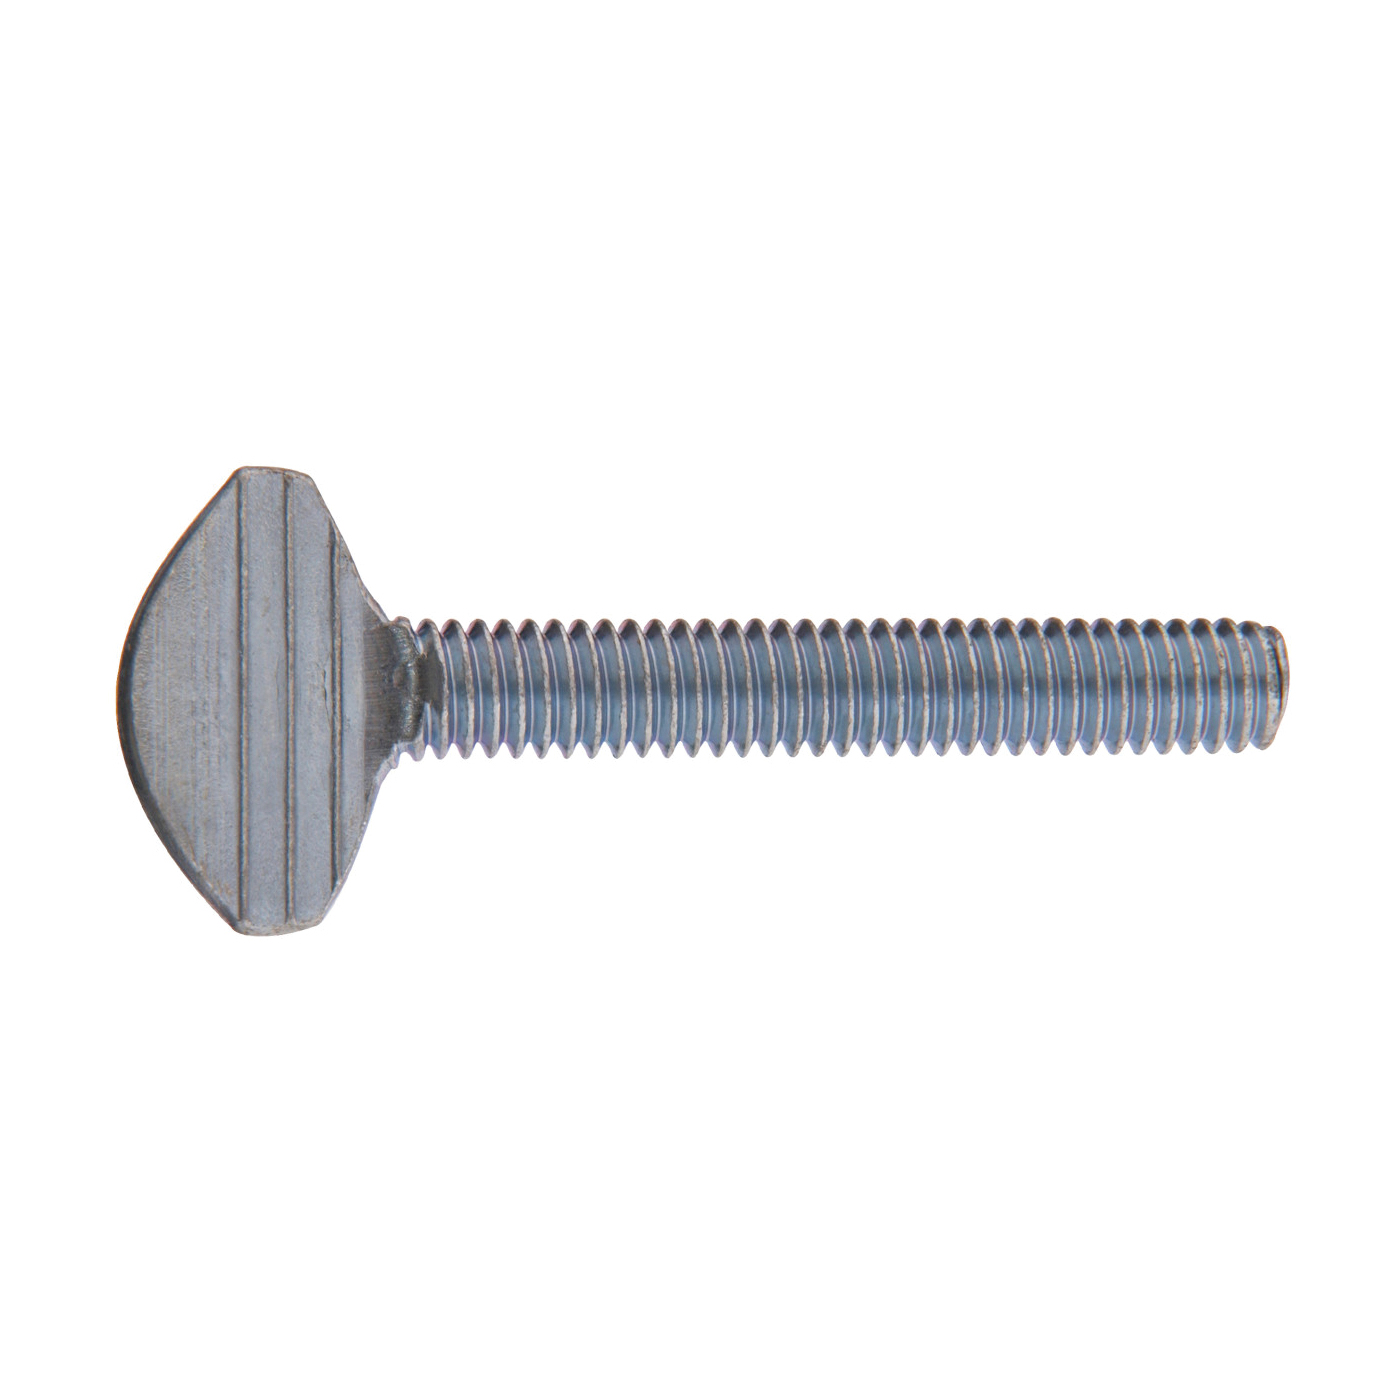 880955 Machine Screw, 1/4-20 Thread, 2 in L, Coarse Thread, Blunt Point, Steel, Zinc-Plated